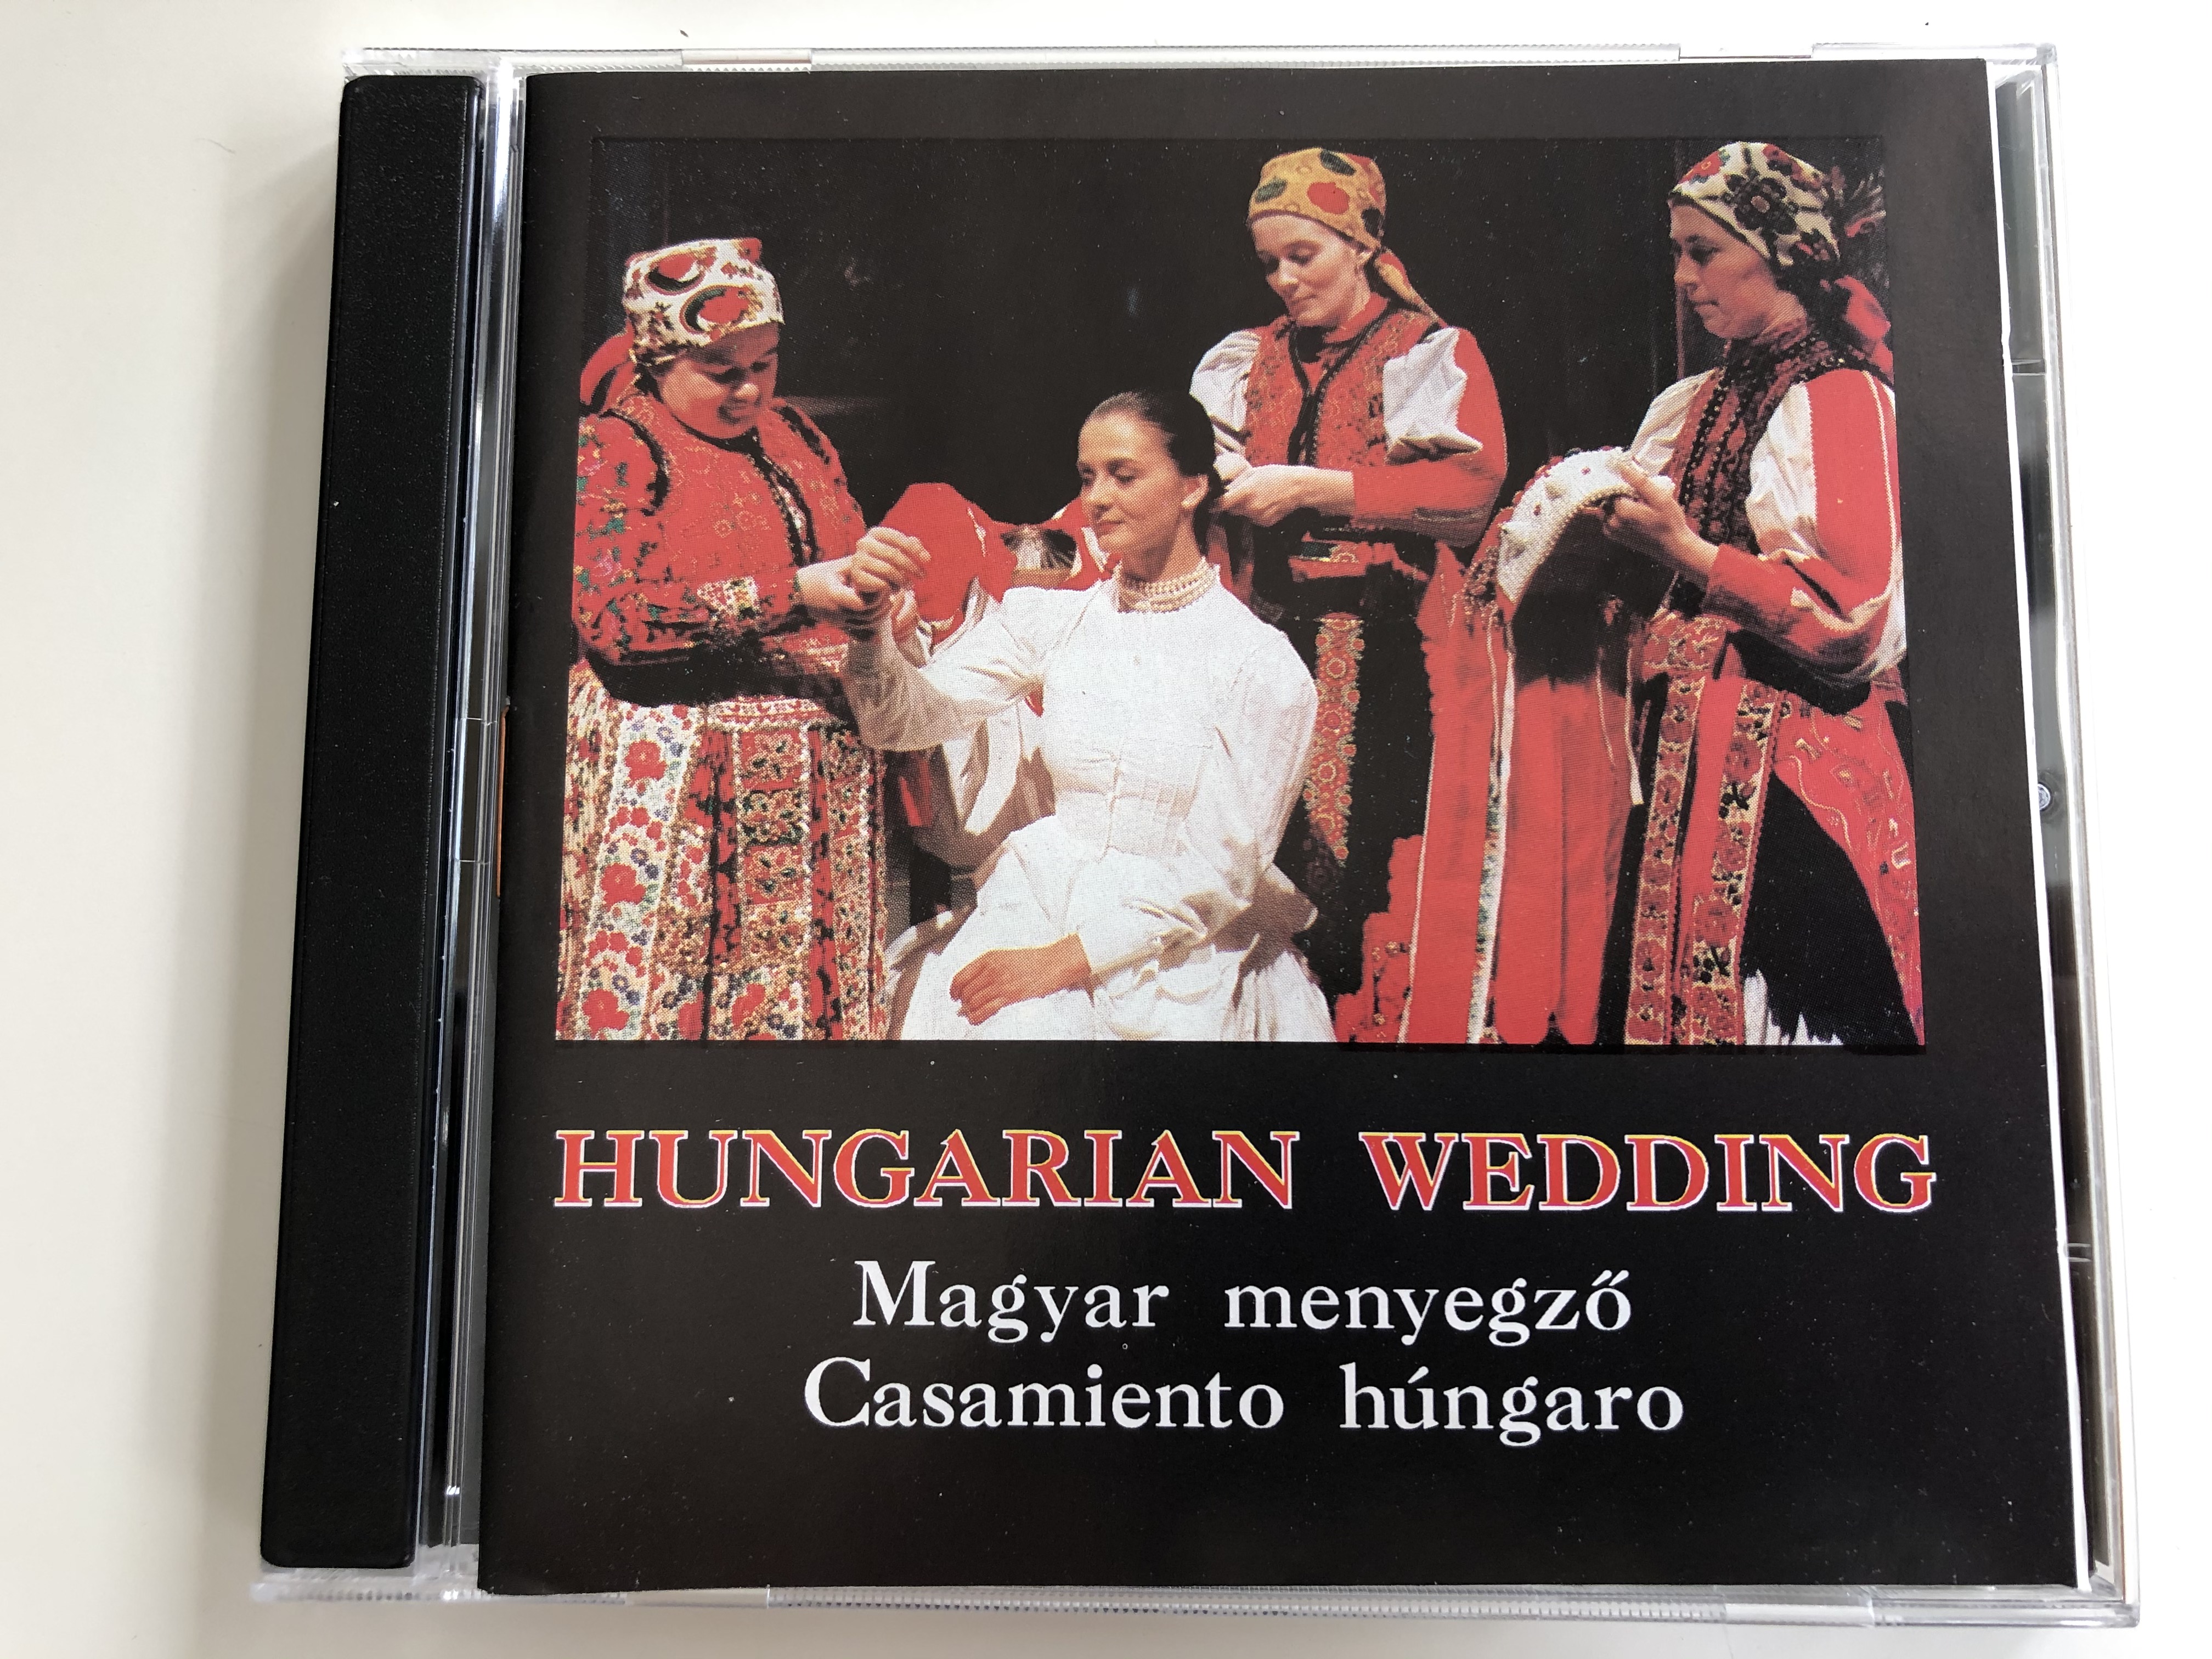 hungarian-wedding-magyar-menyegz-casamiento-h-ngaro-yellow-records-audio-cd-1992-hy-cd-0001-1-.jpg